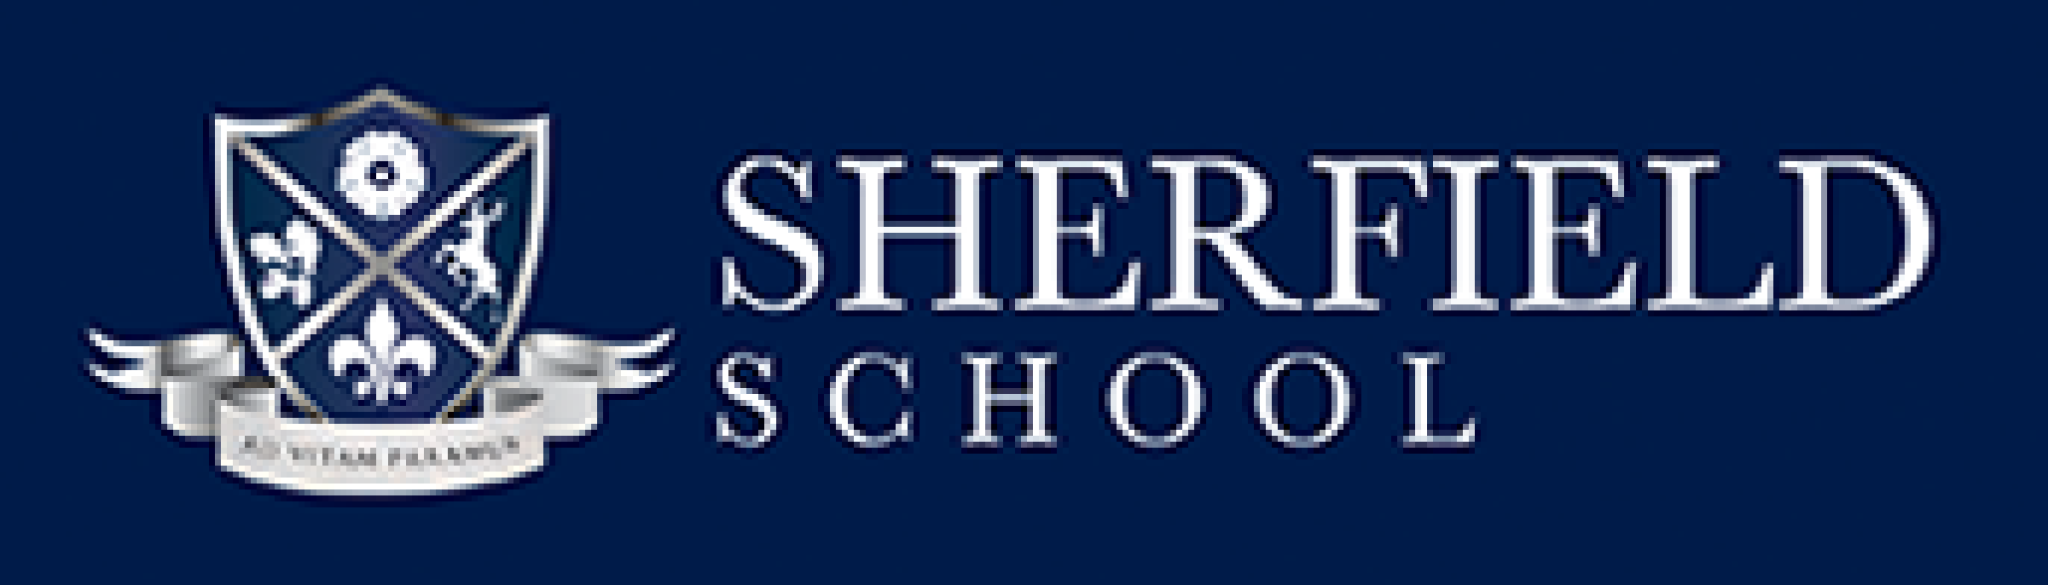 sherfield-logo-343.png